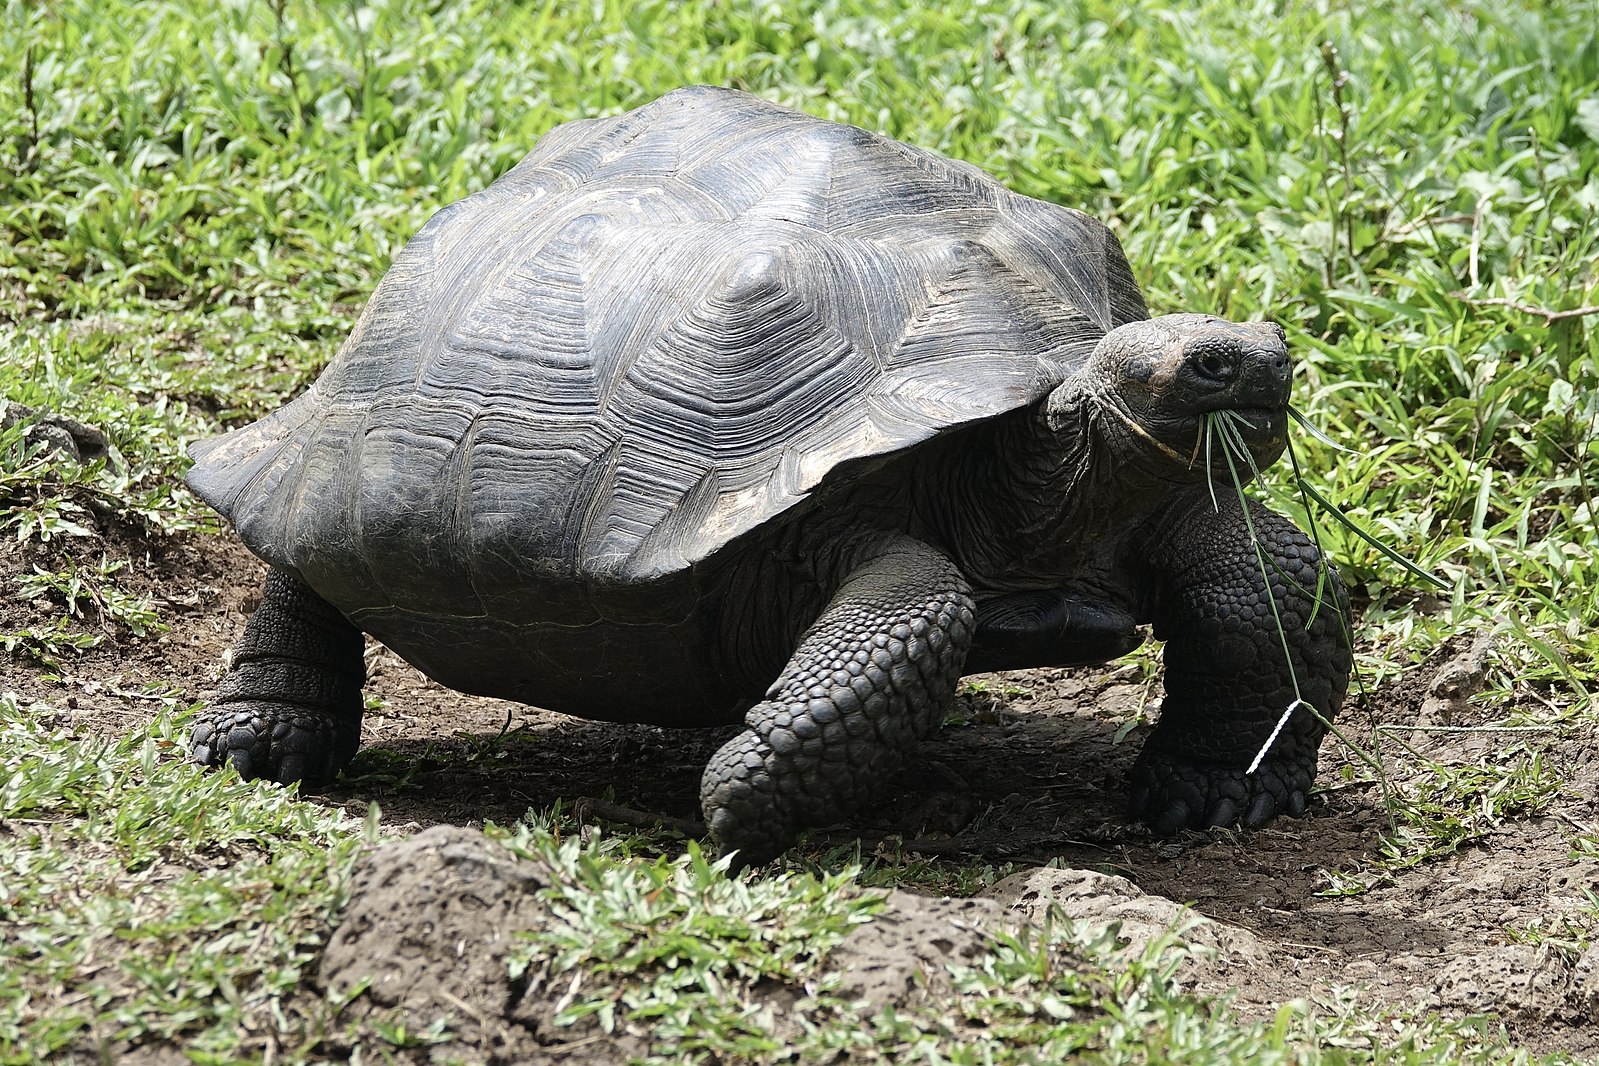 Can Tortoises Eat Zucchini